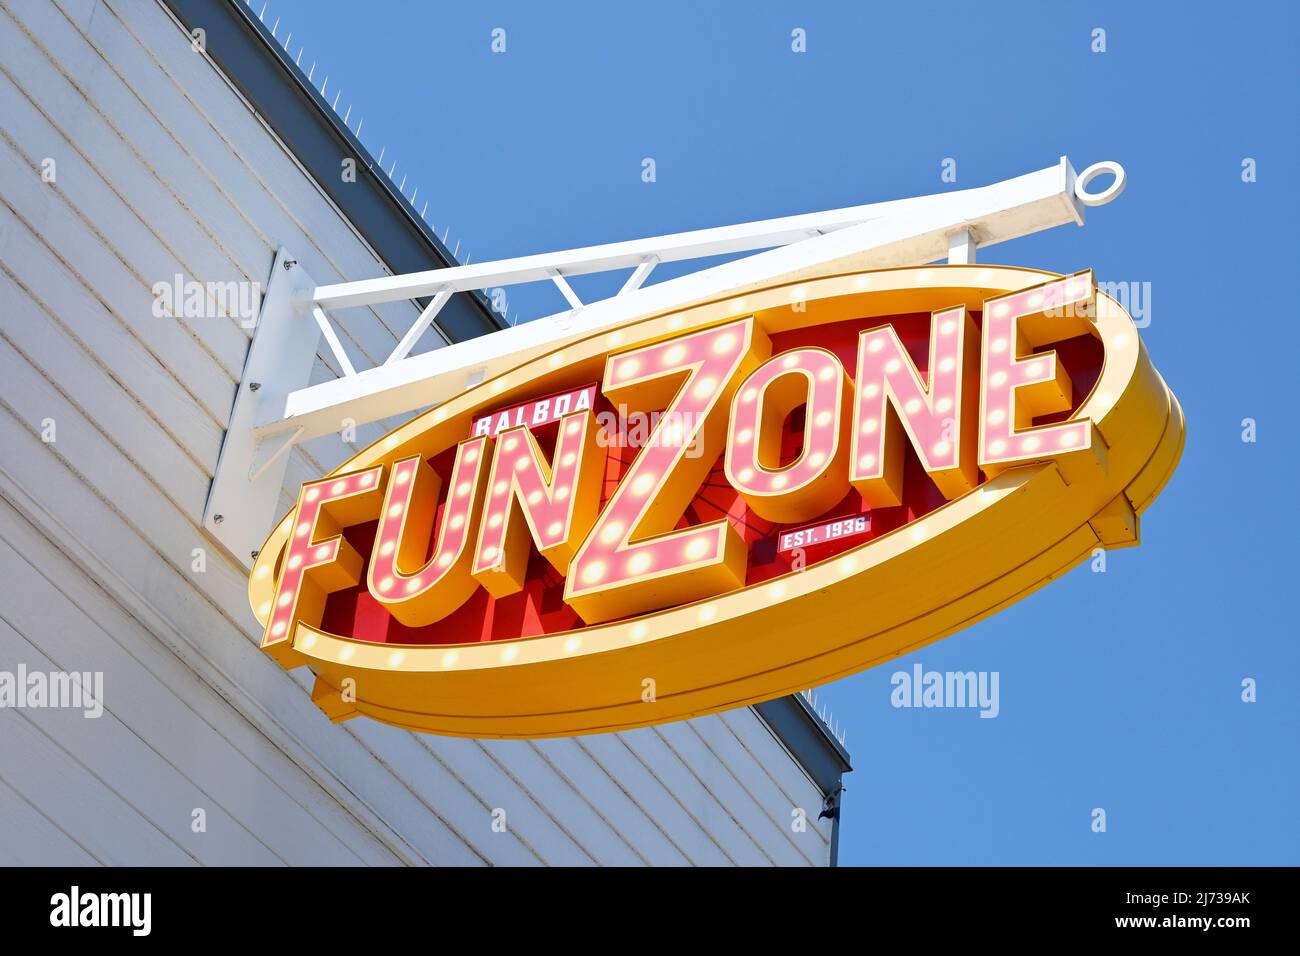 NEWPORT BEACH, CALIFORNIA - 4 MAY 2022: Balboa Fun Zone sign. Stock Photo